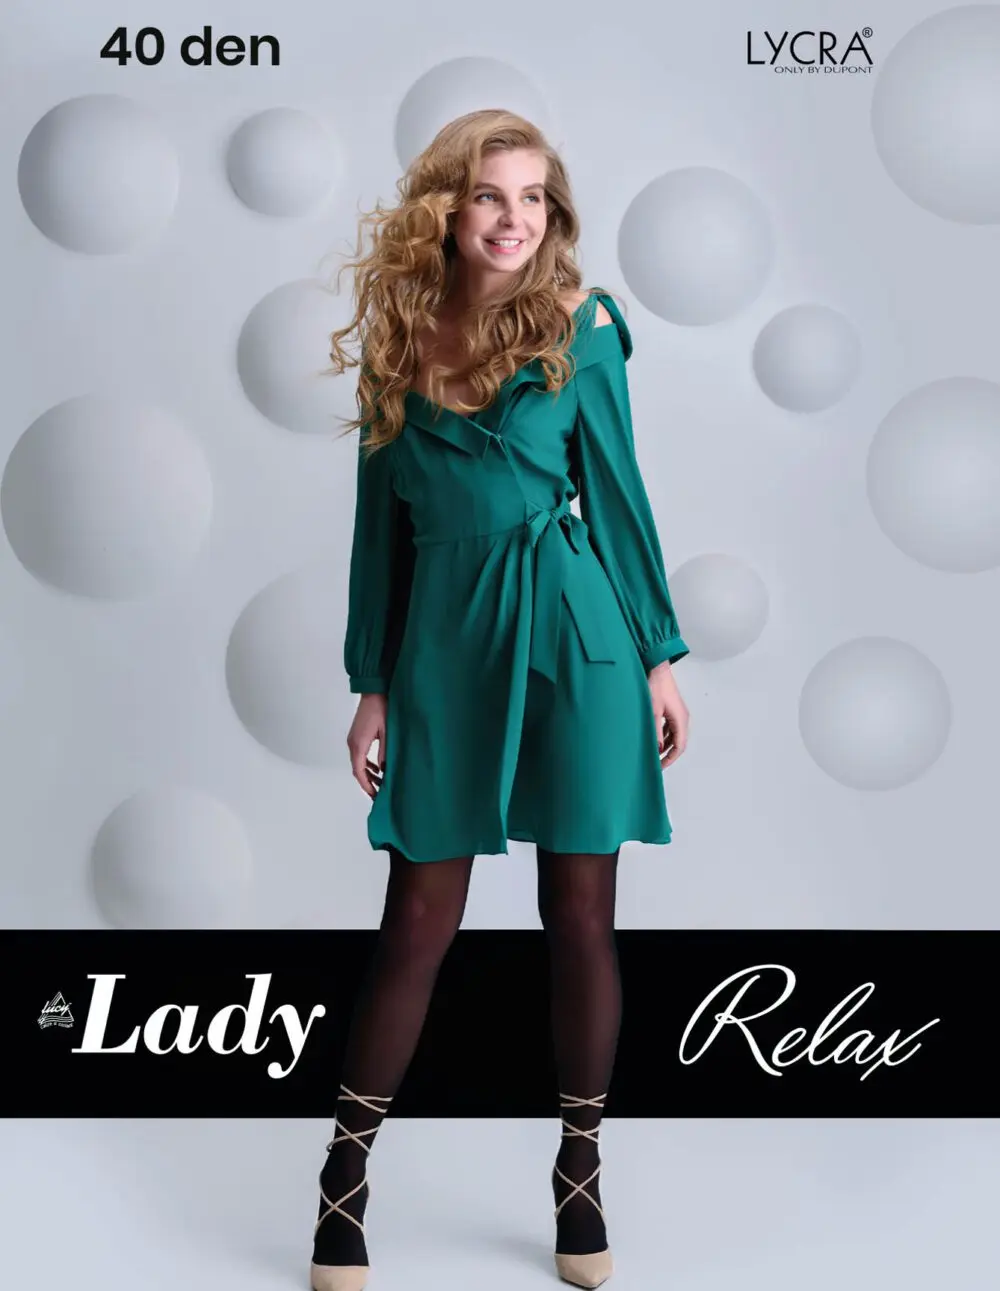 Dresuri dama - LUCY LADY DRES LYCRA RELAX 40DEN BEJ/NEGRU (L12), lucidiusmarket.ro